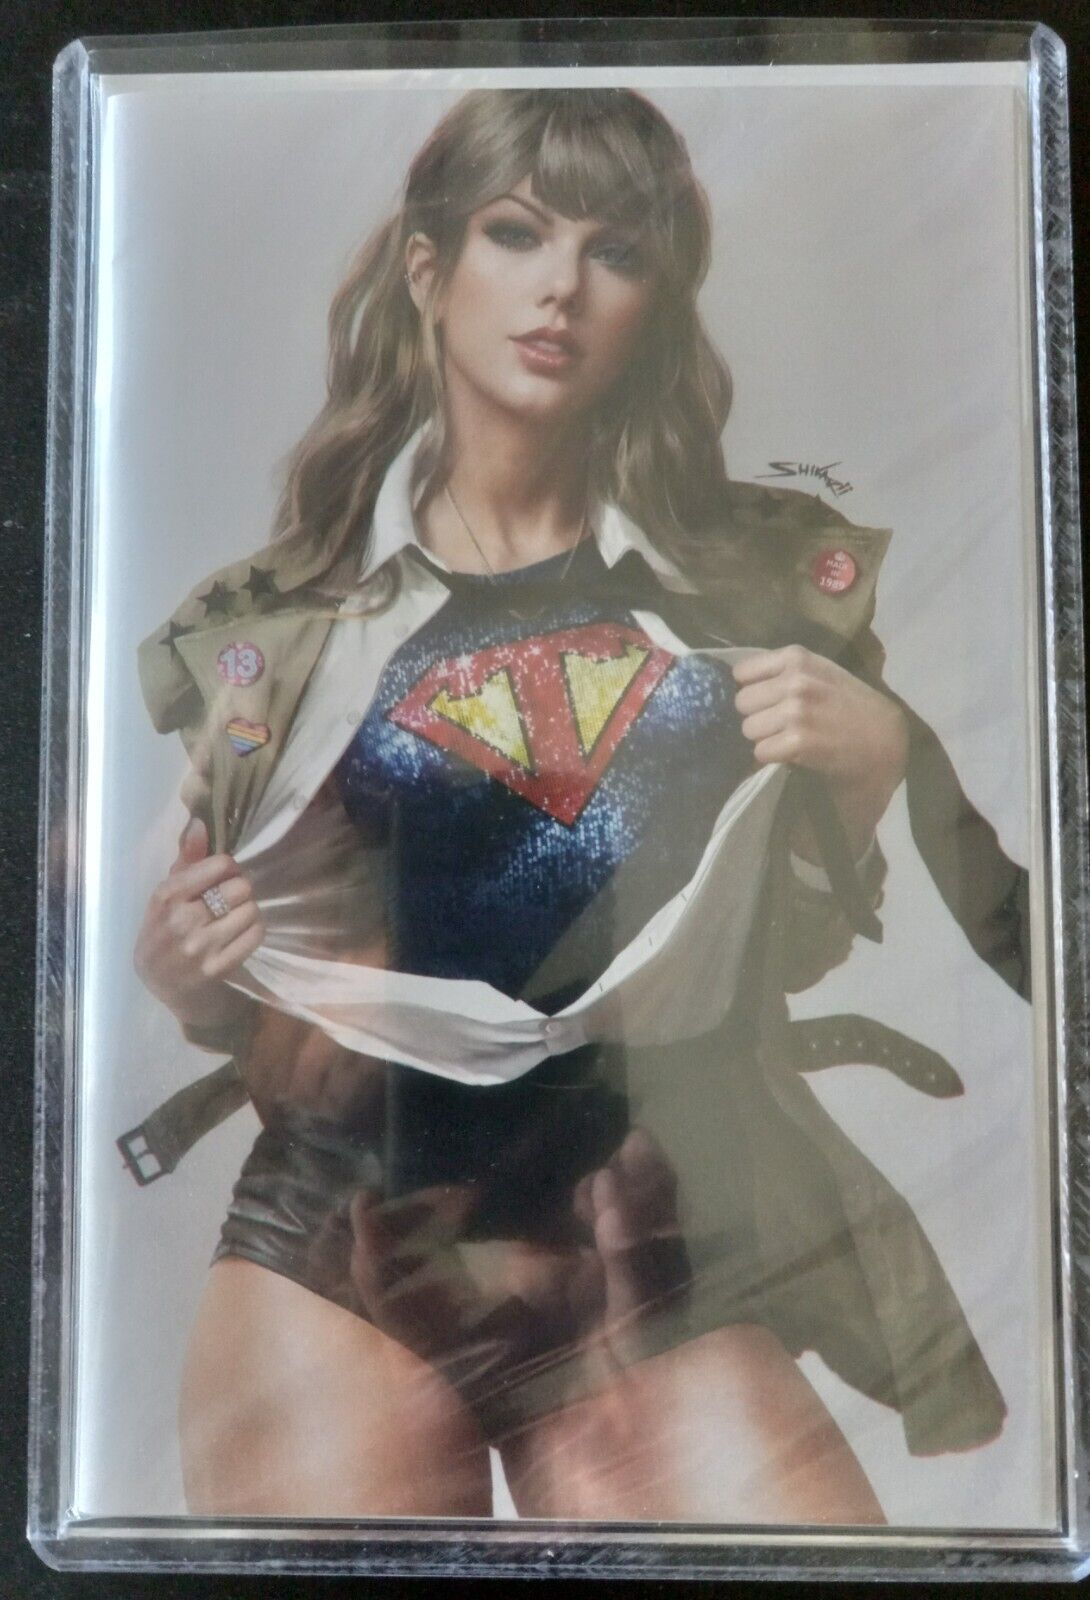 Shikarii FEMALE FORCE Taylor Swift Supergirl Art Only Virgin Ltd 500 copies NEW